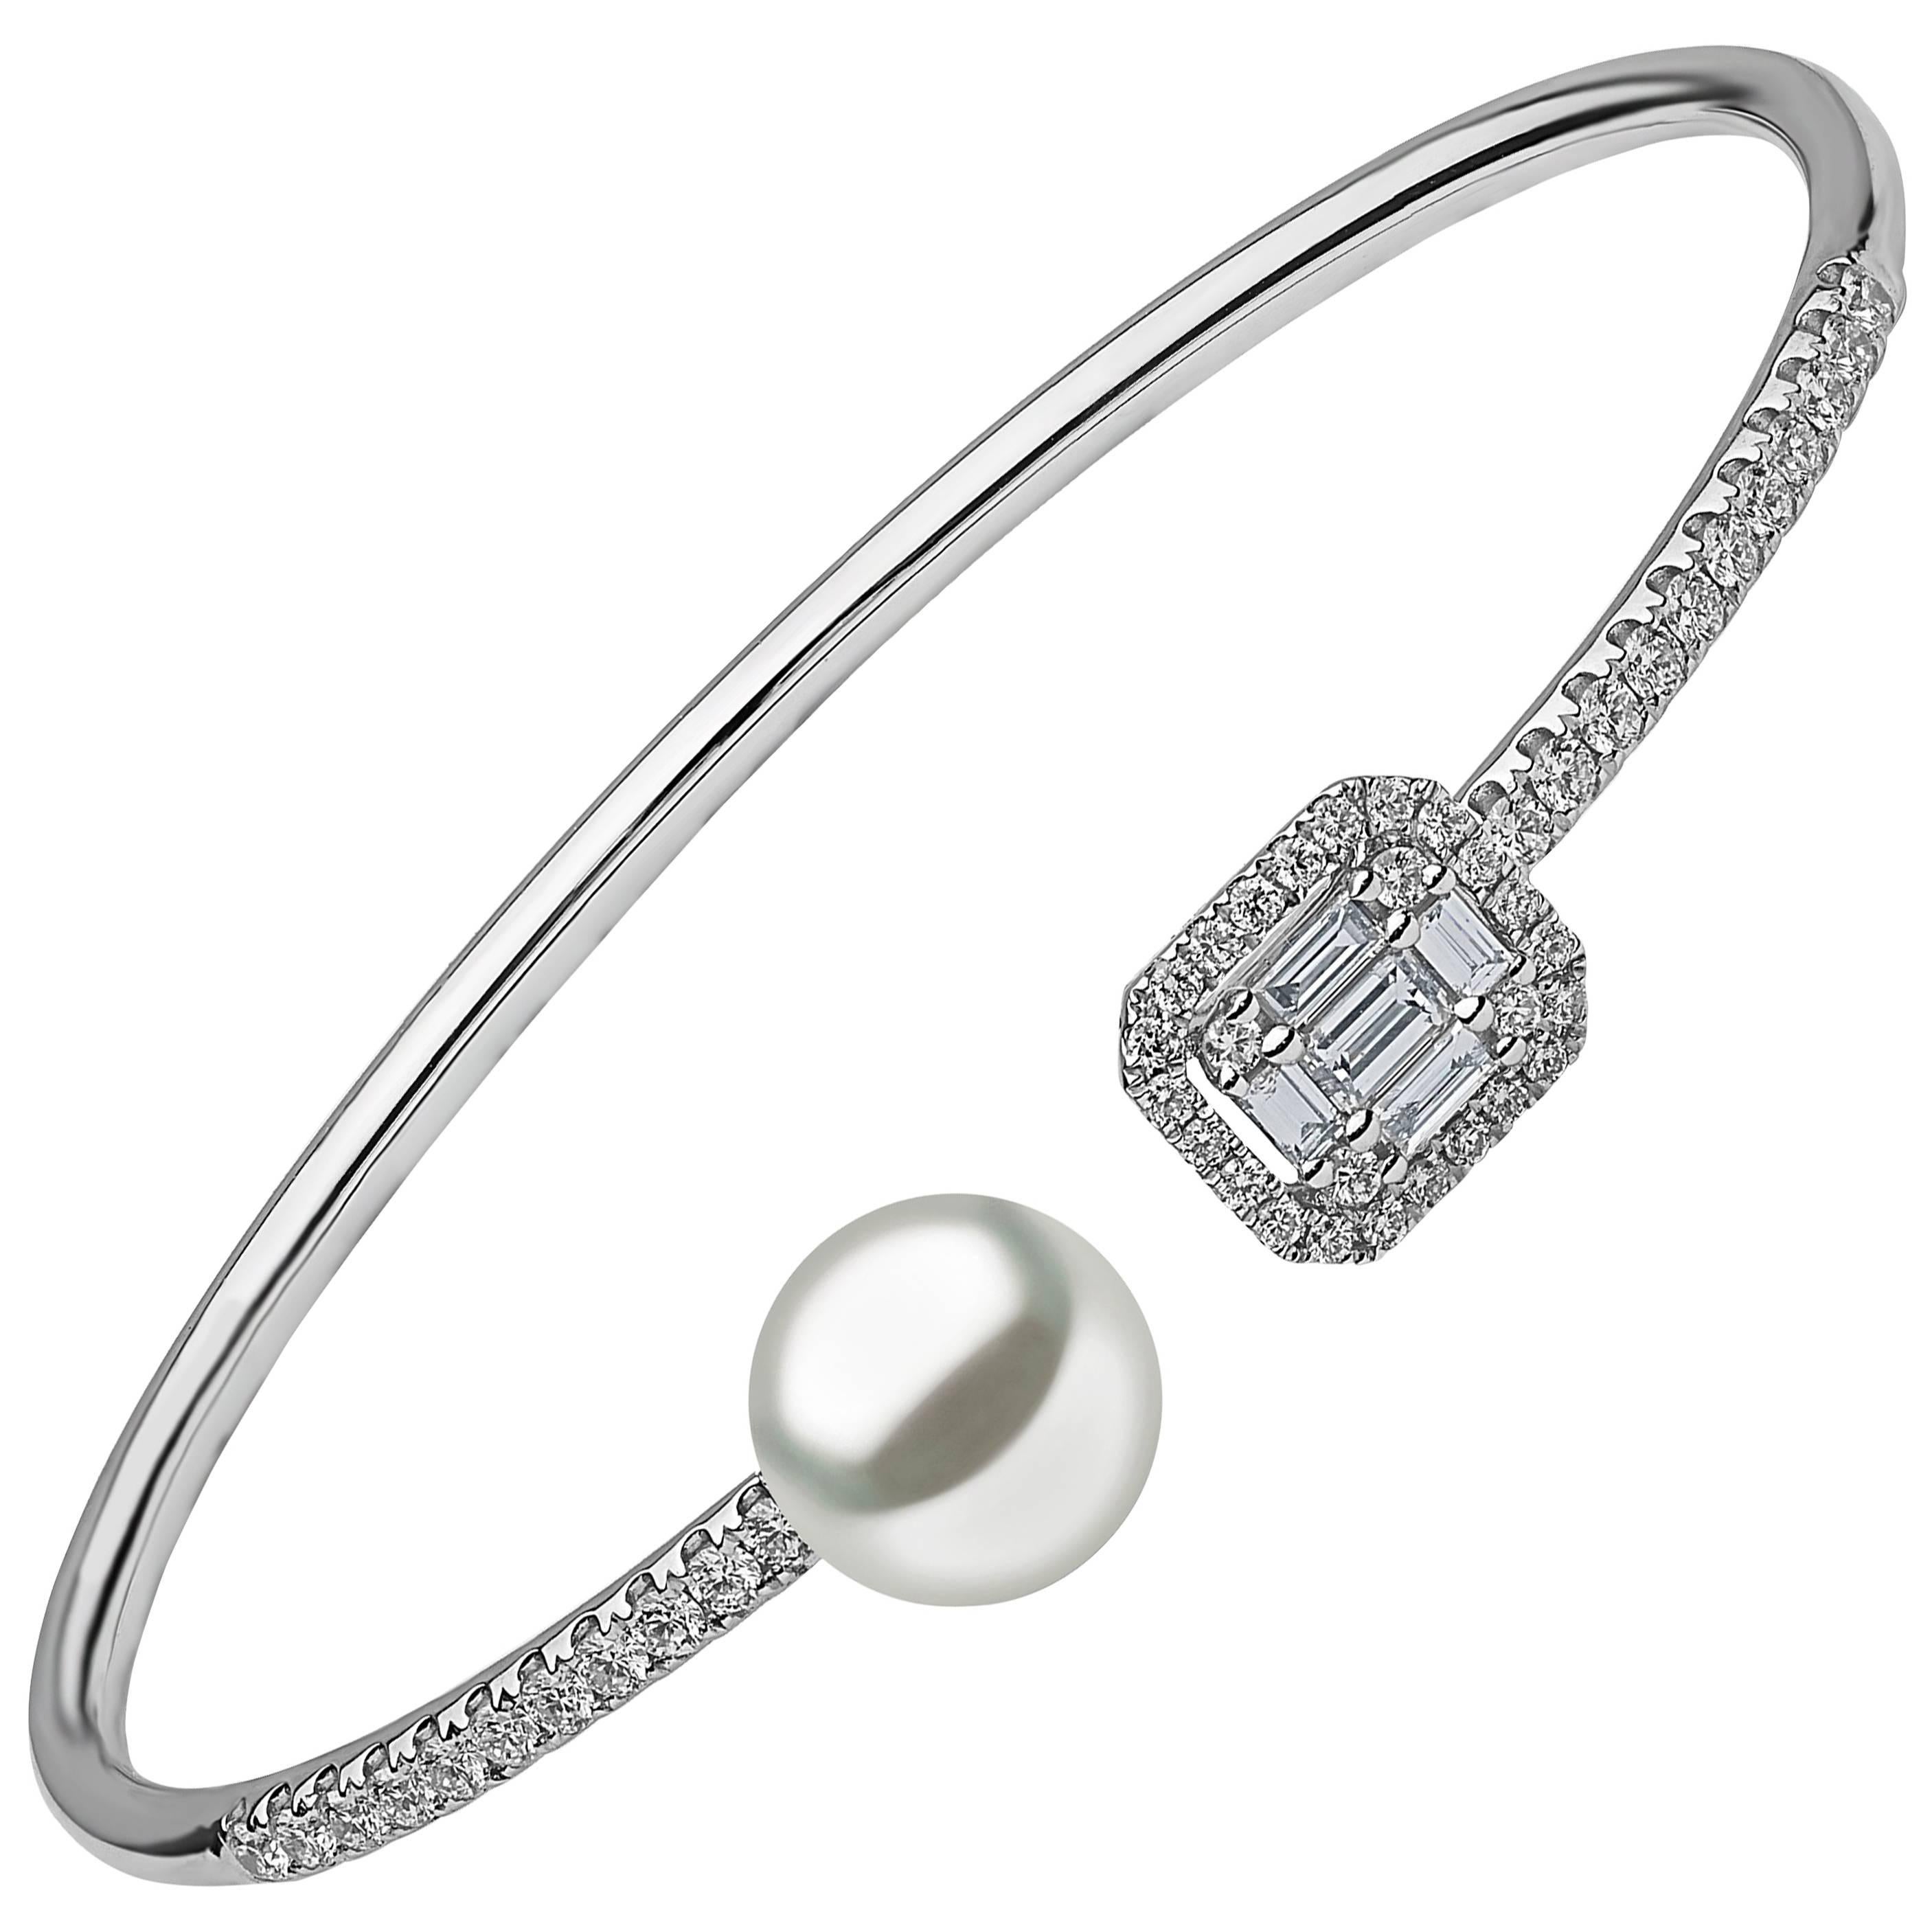 Yoko London South Sea pearl and white diamond bracelet in white gold